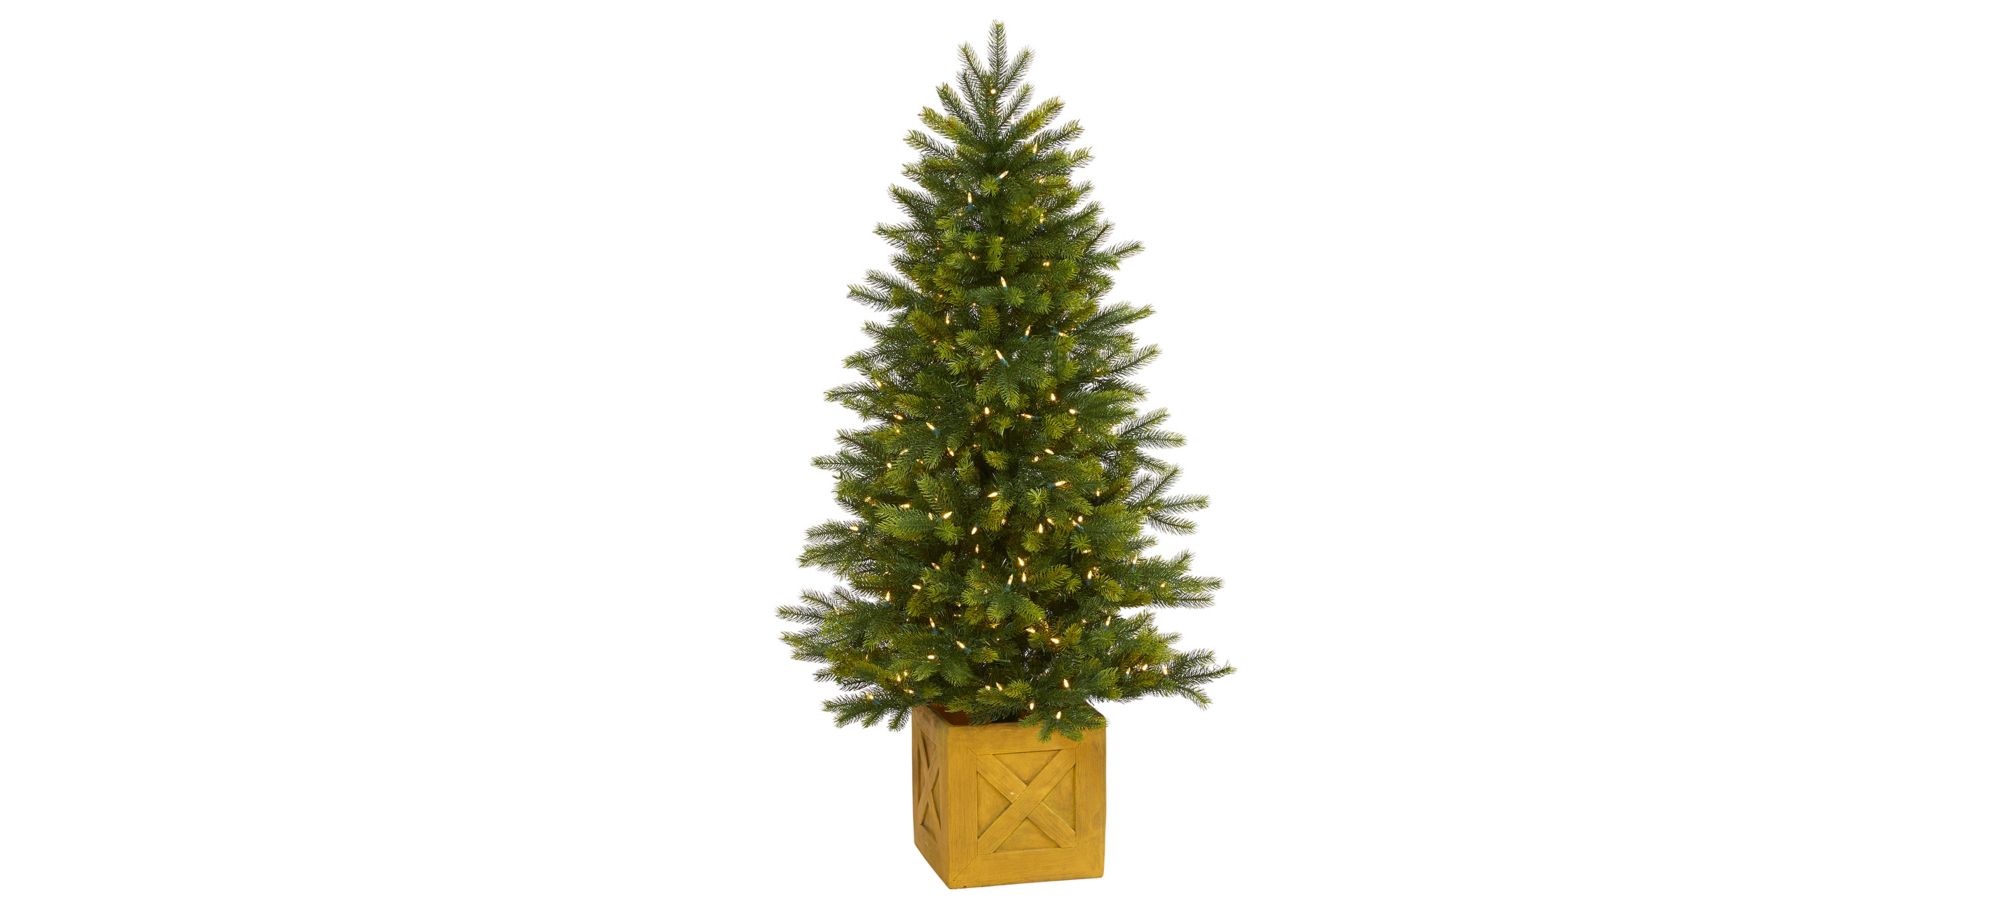 5ft. Pre-Lit Manchester Fir Artificial Christmas Tree in Green by Bellanest